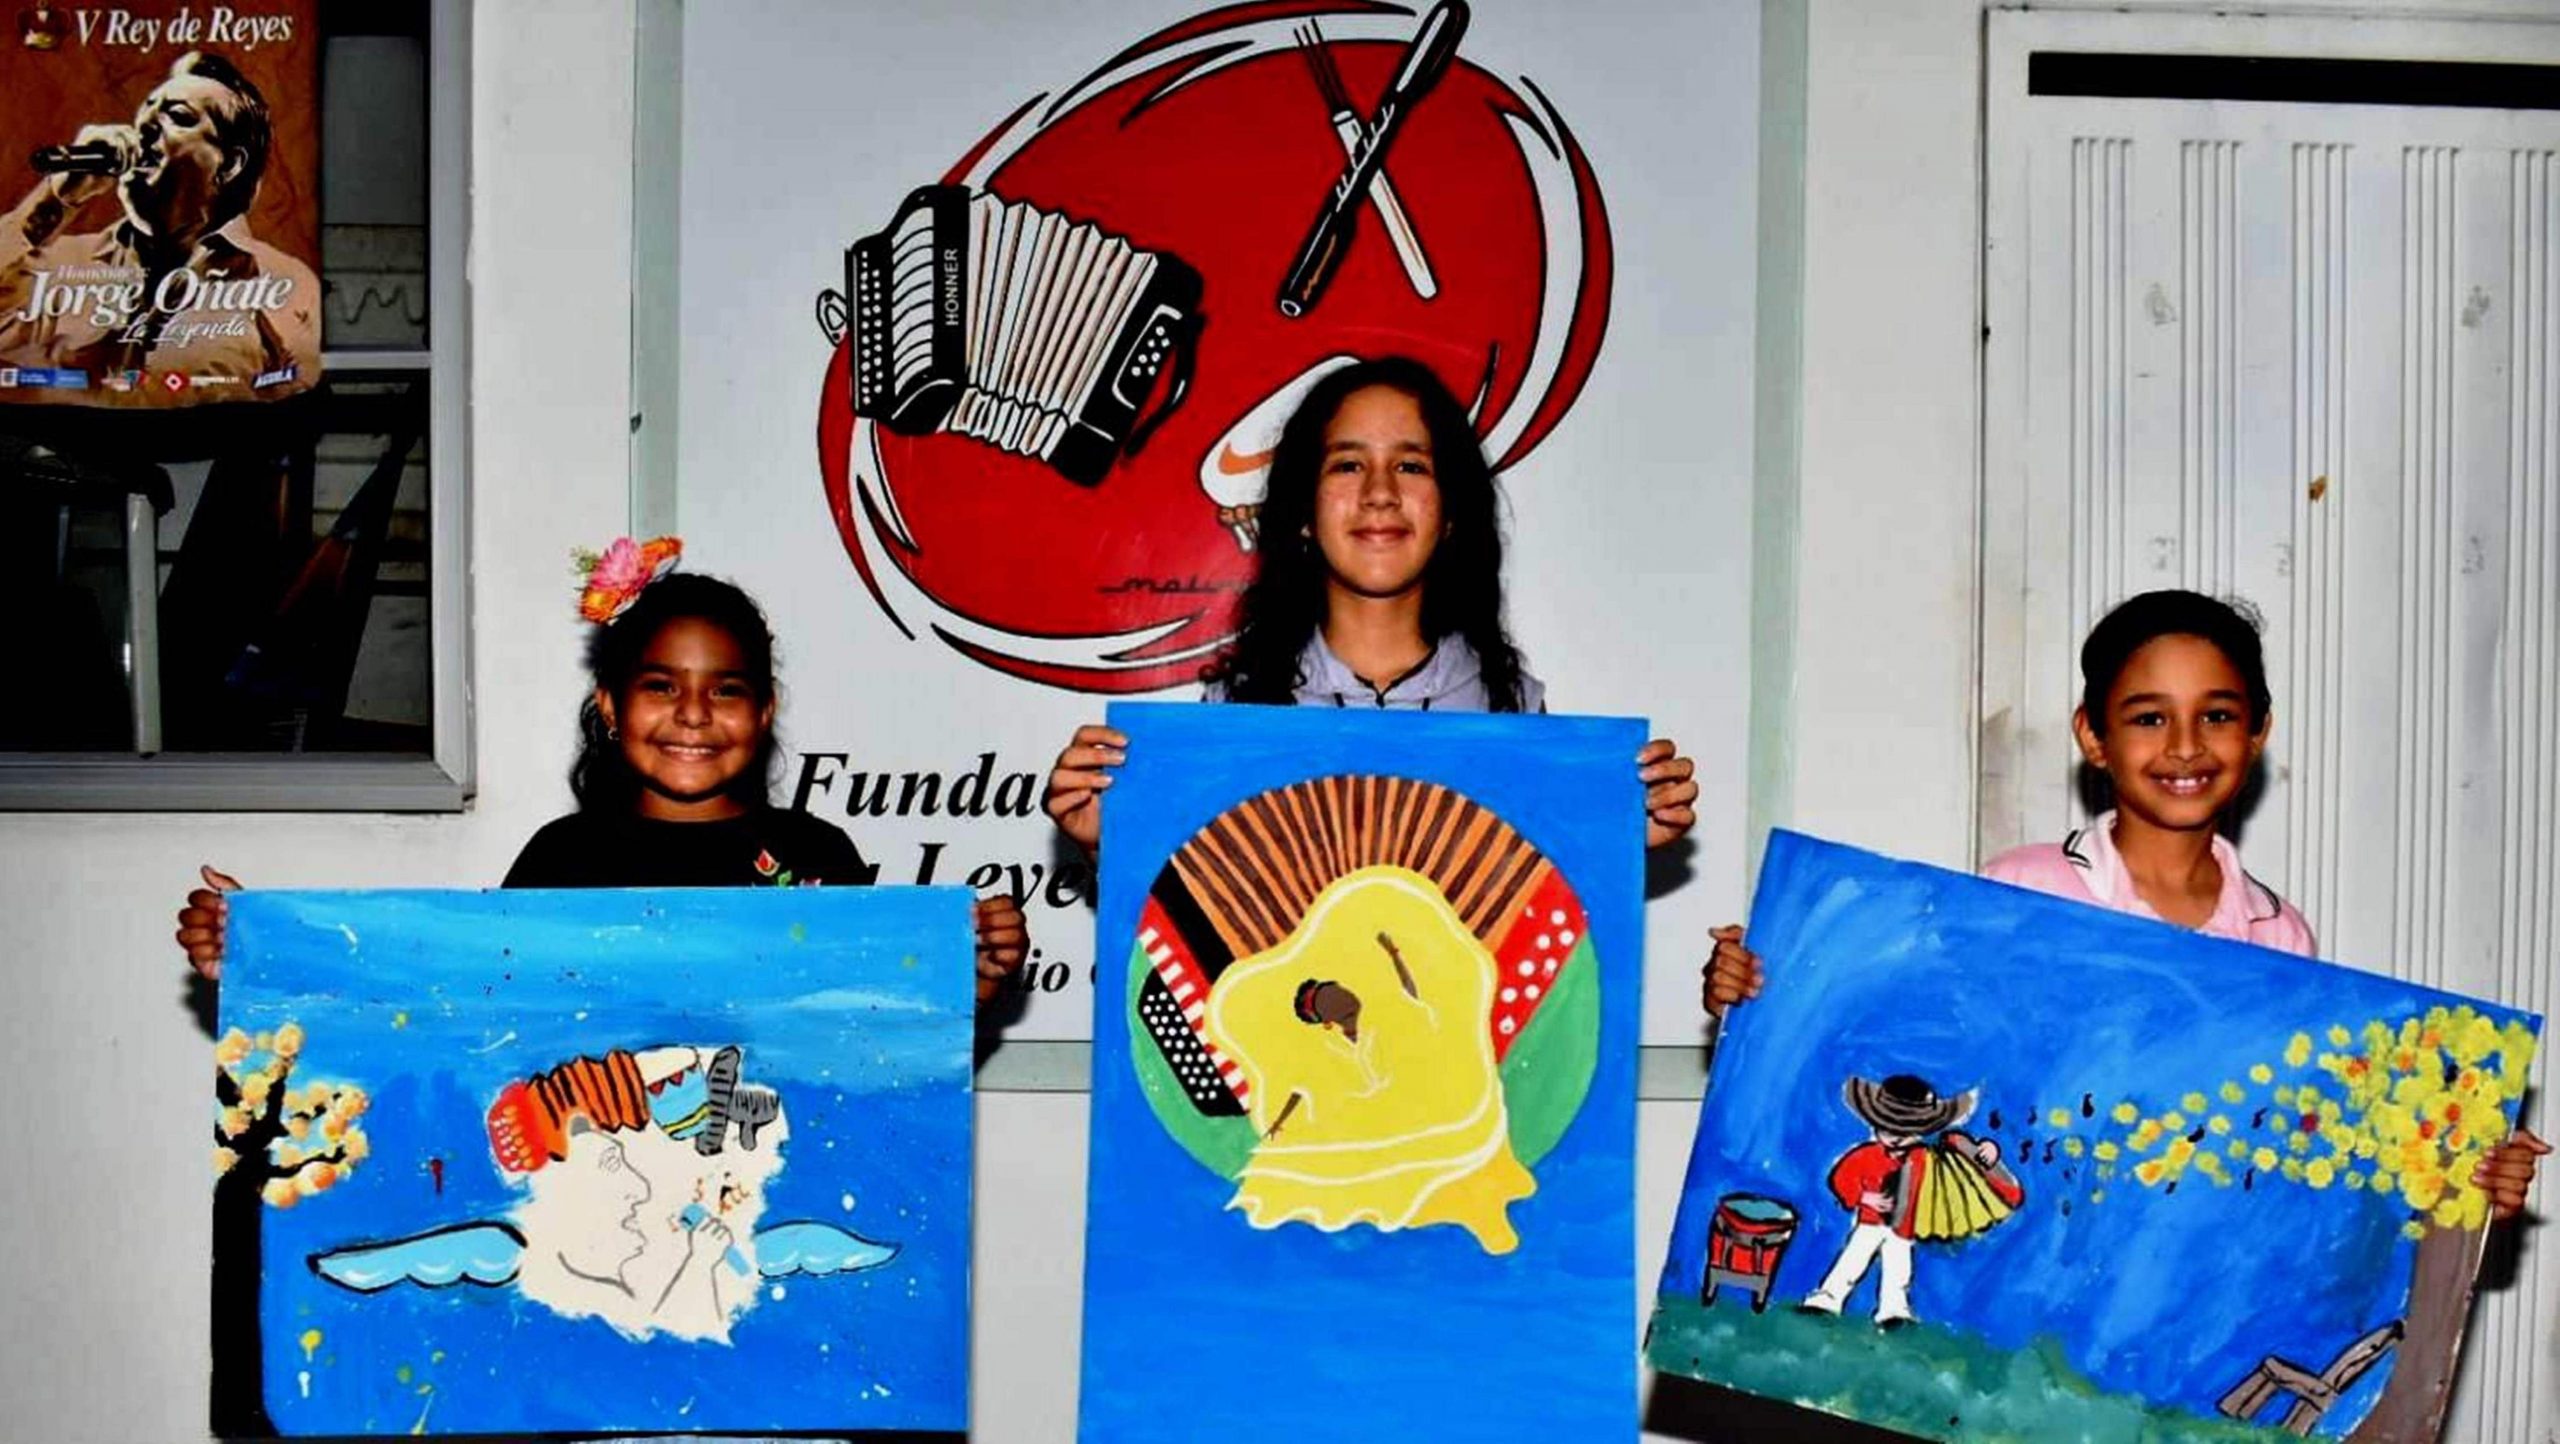 Concurso de pintura infantil ratificó el amor de la niñez por el folclor vallenato que promovió Jorge Oñate